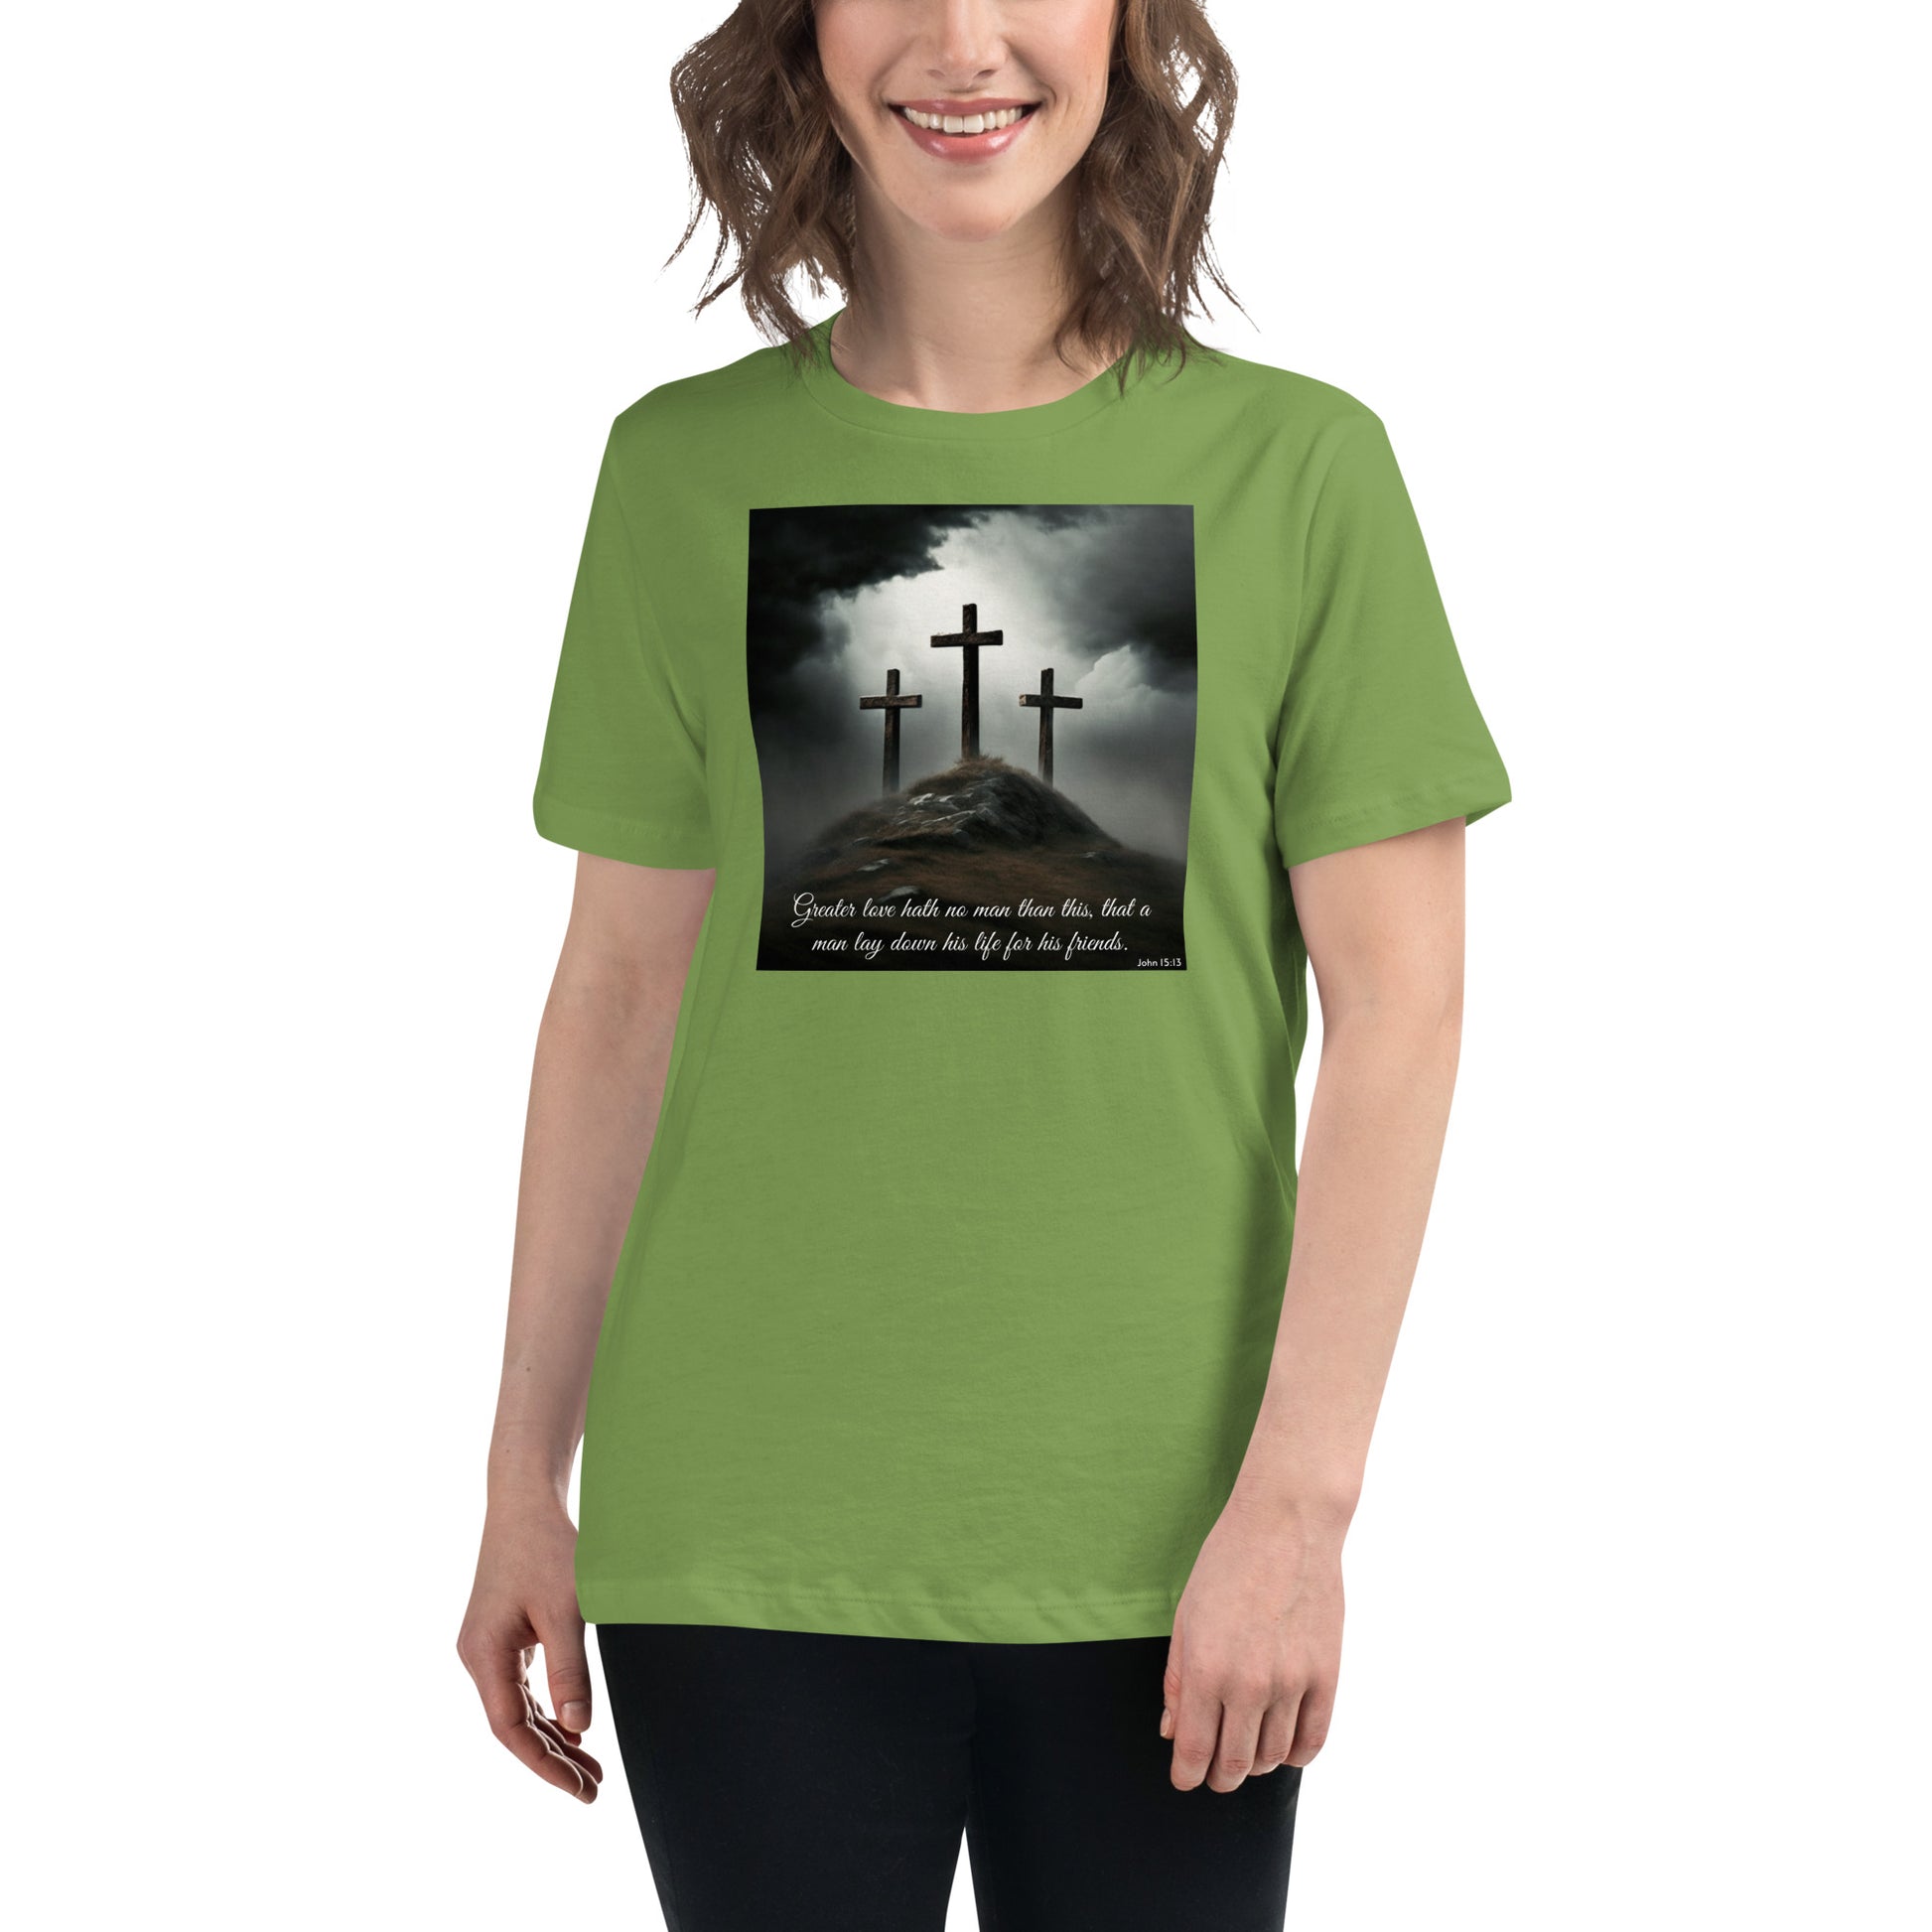 John 15:13 Women's Christian T-Shirt